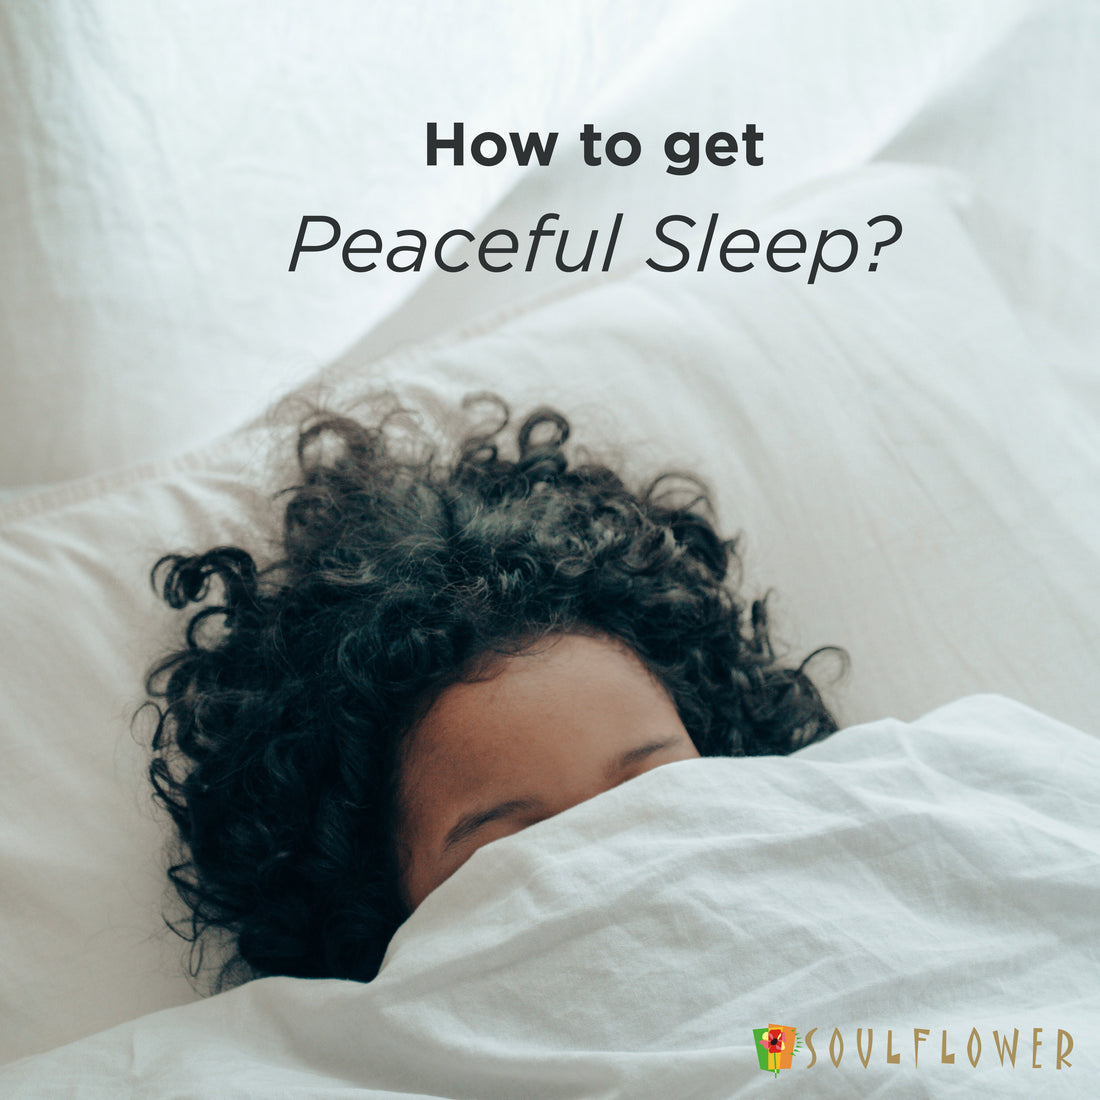 How to get peaceful sleep?